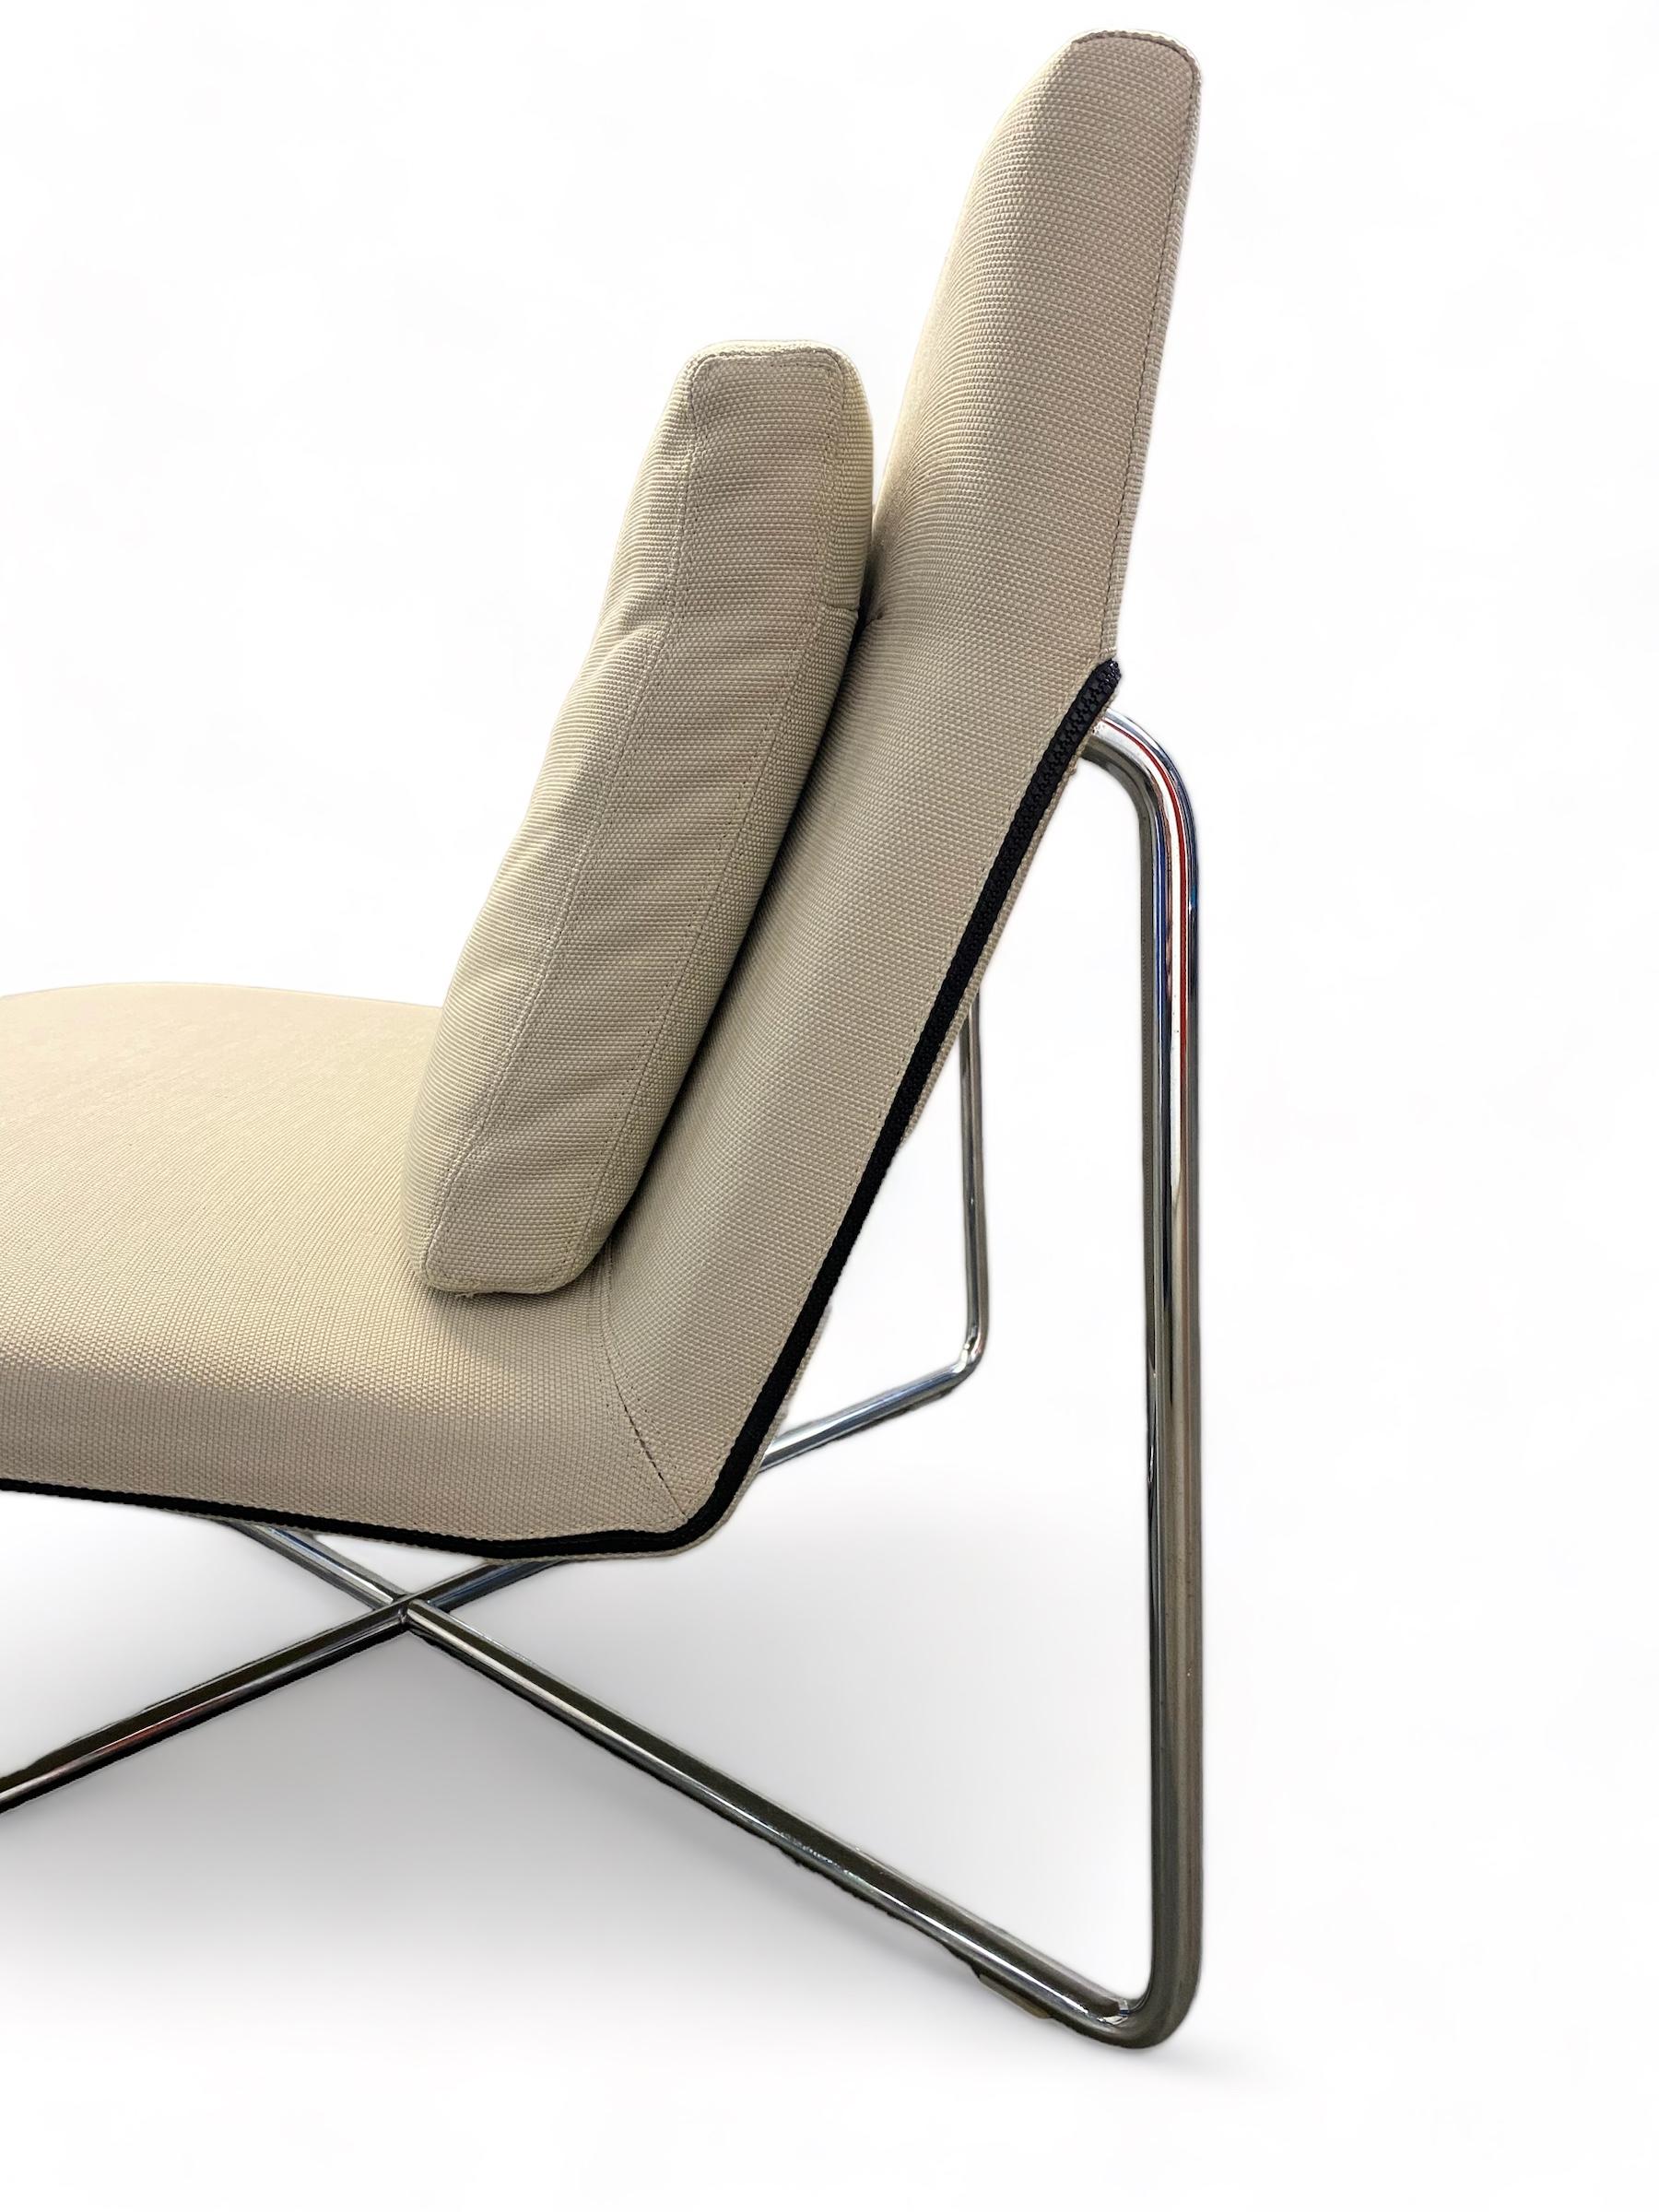 Italian White Diller chair designed by Rodolfo Dordoni for Minotti, Italy.